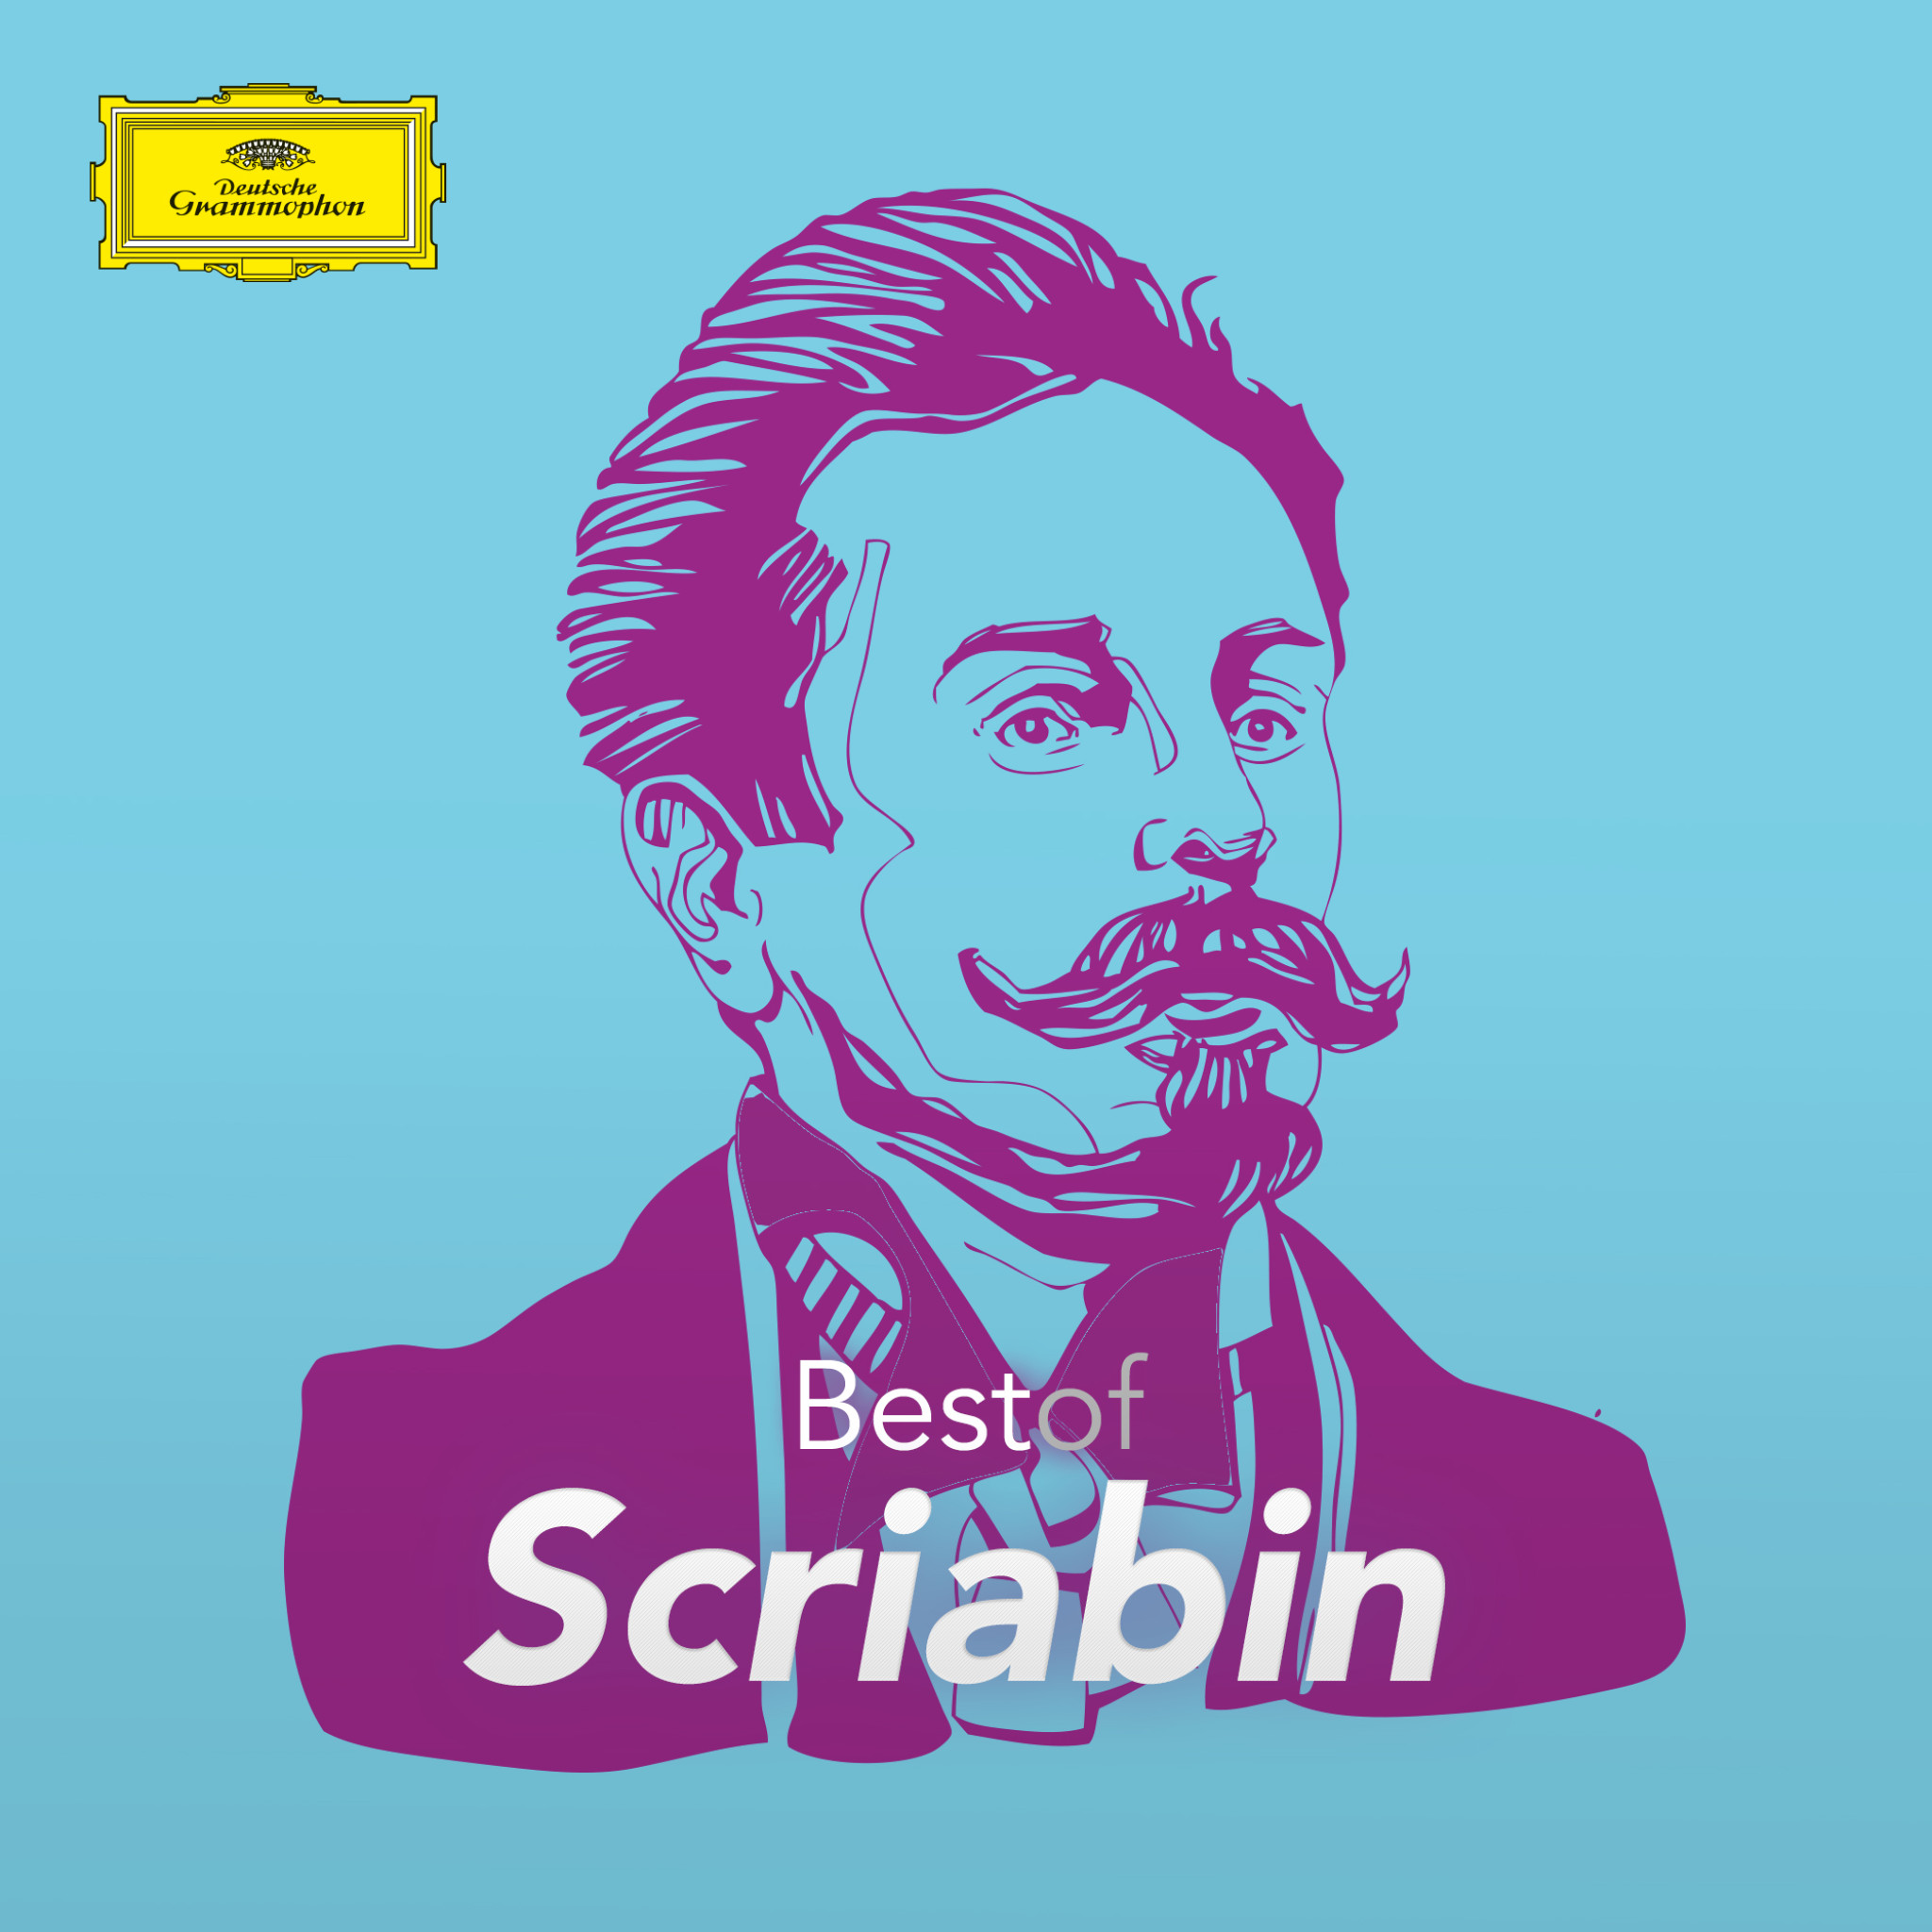 Scriabin - Best of